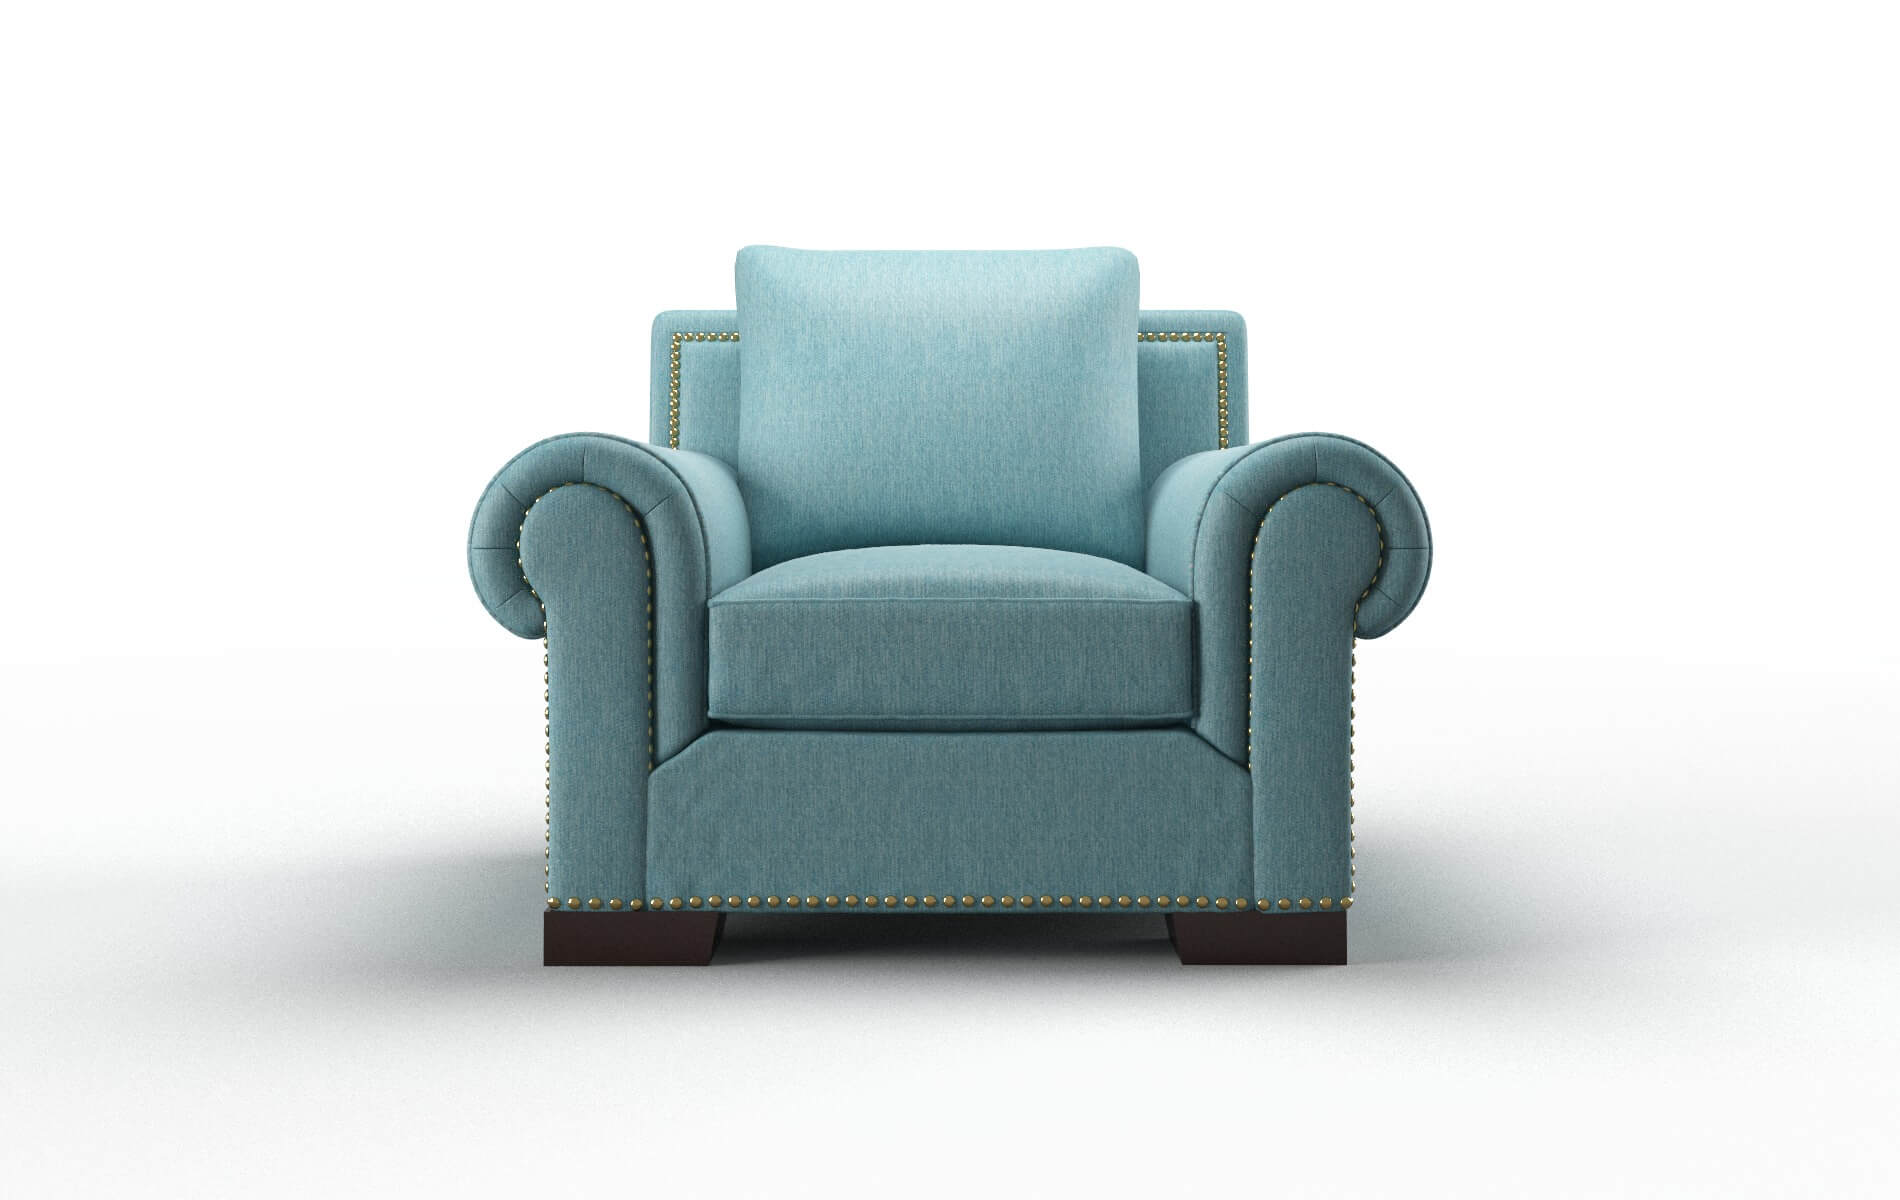 James Cosmo Turquoise Chair espresso legs 1